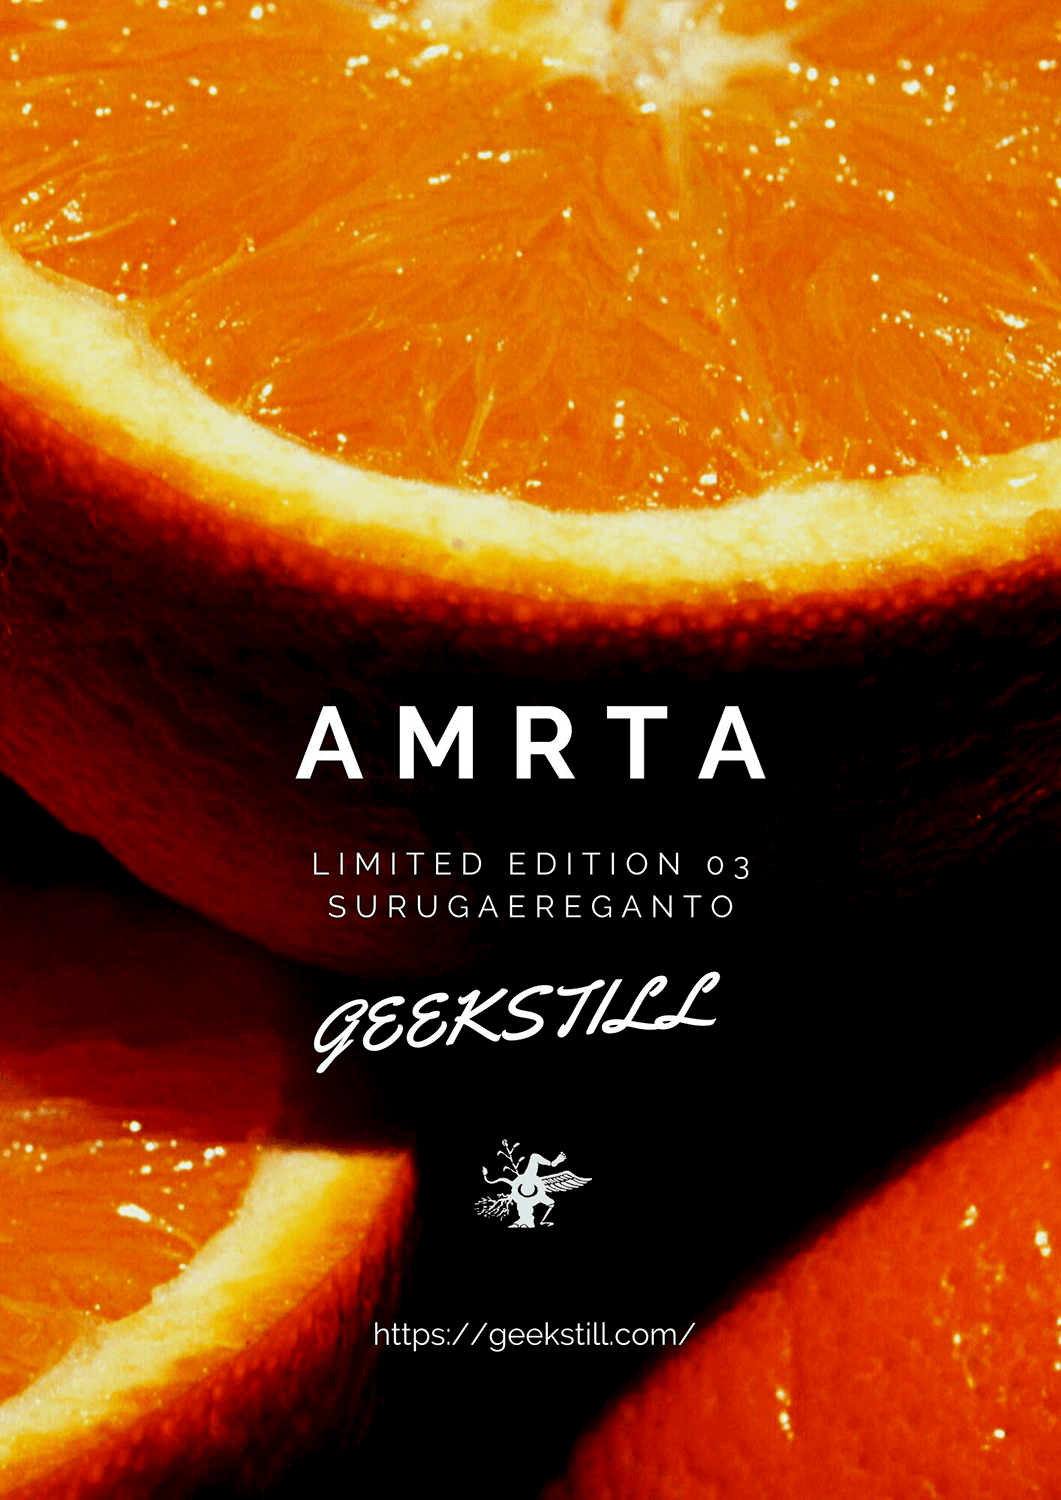 amrta-gin-limited-edition-03_03